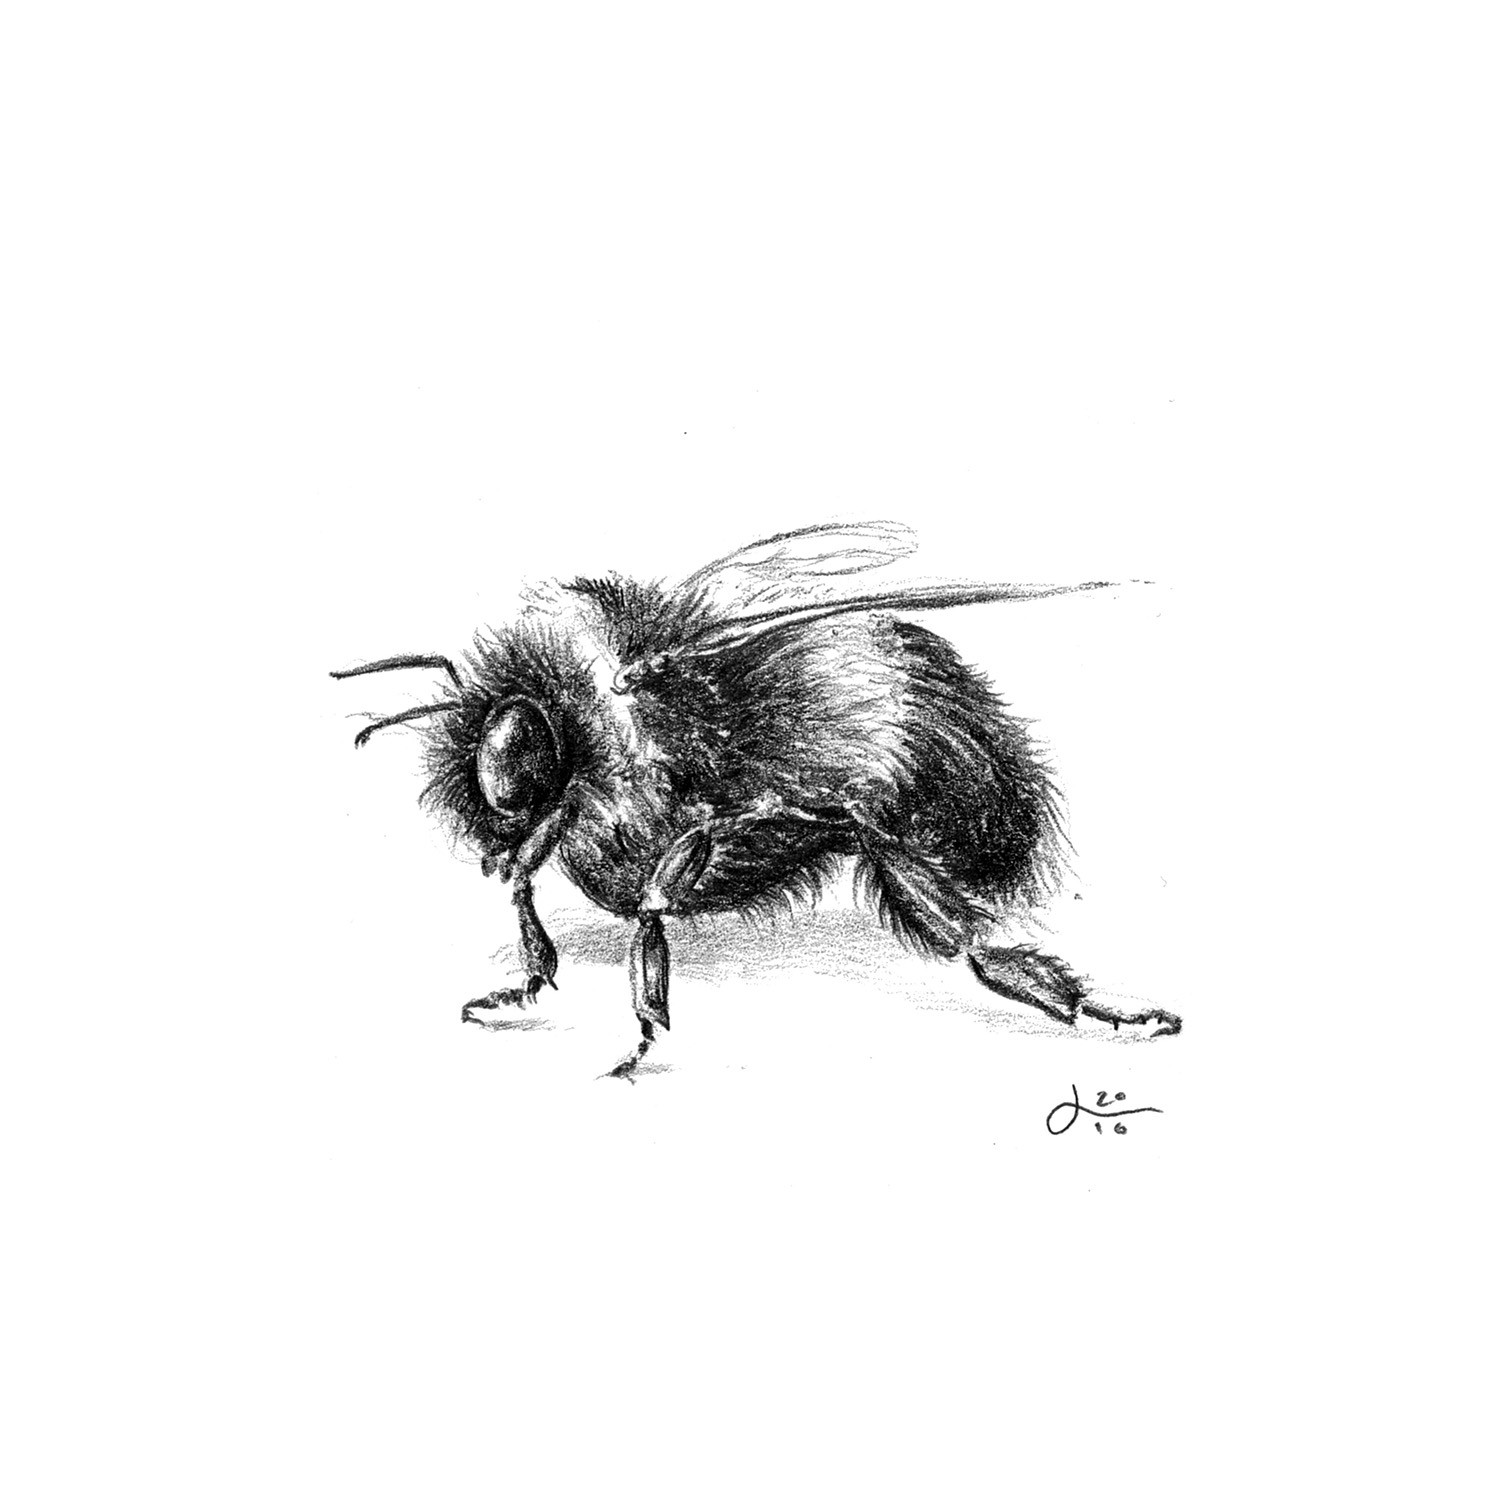 Honeybee Worker Bee Queen And Drone Illustrations HighRes Vector Graphic   Getty Images